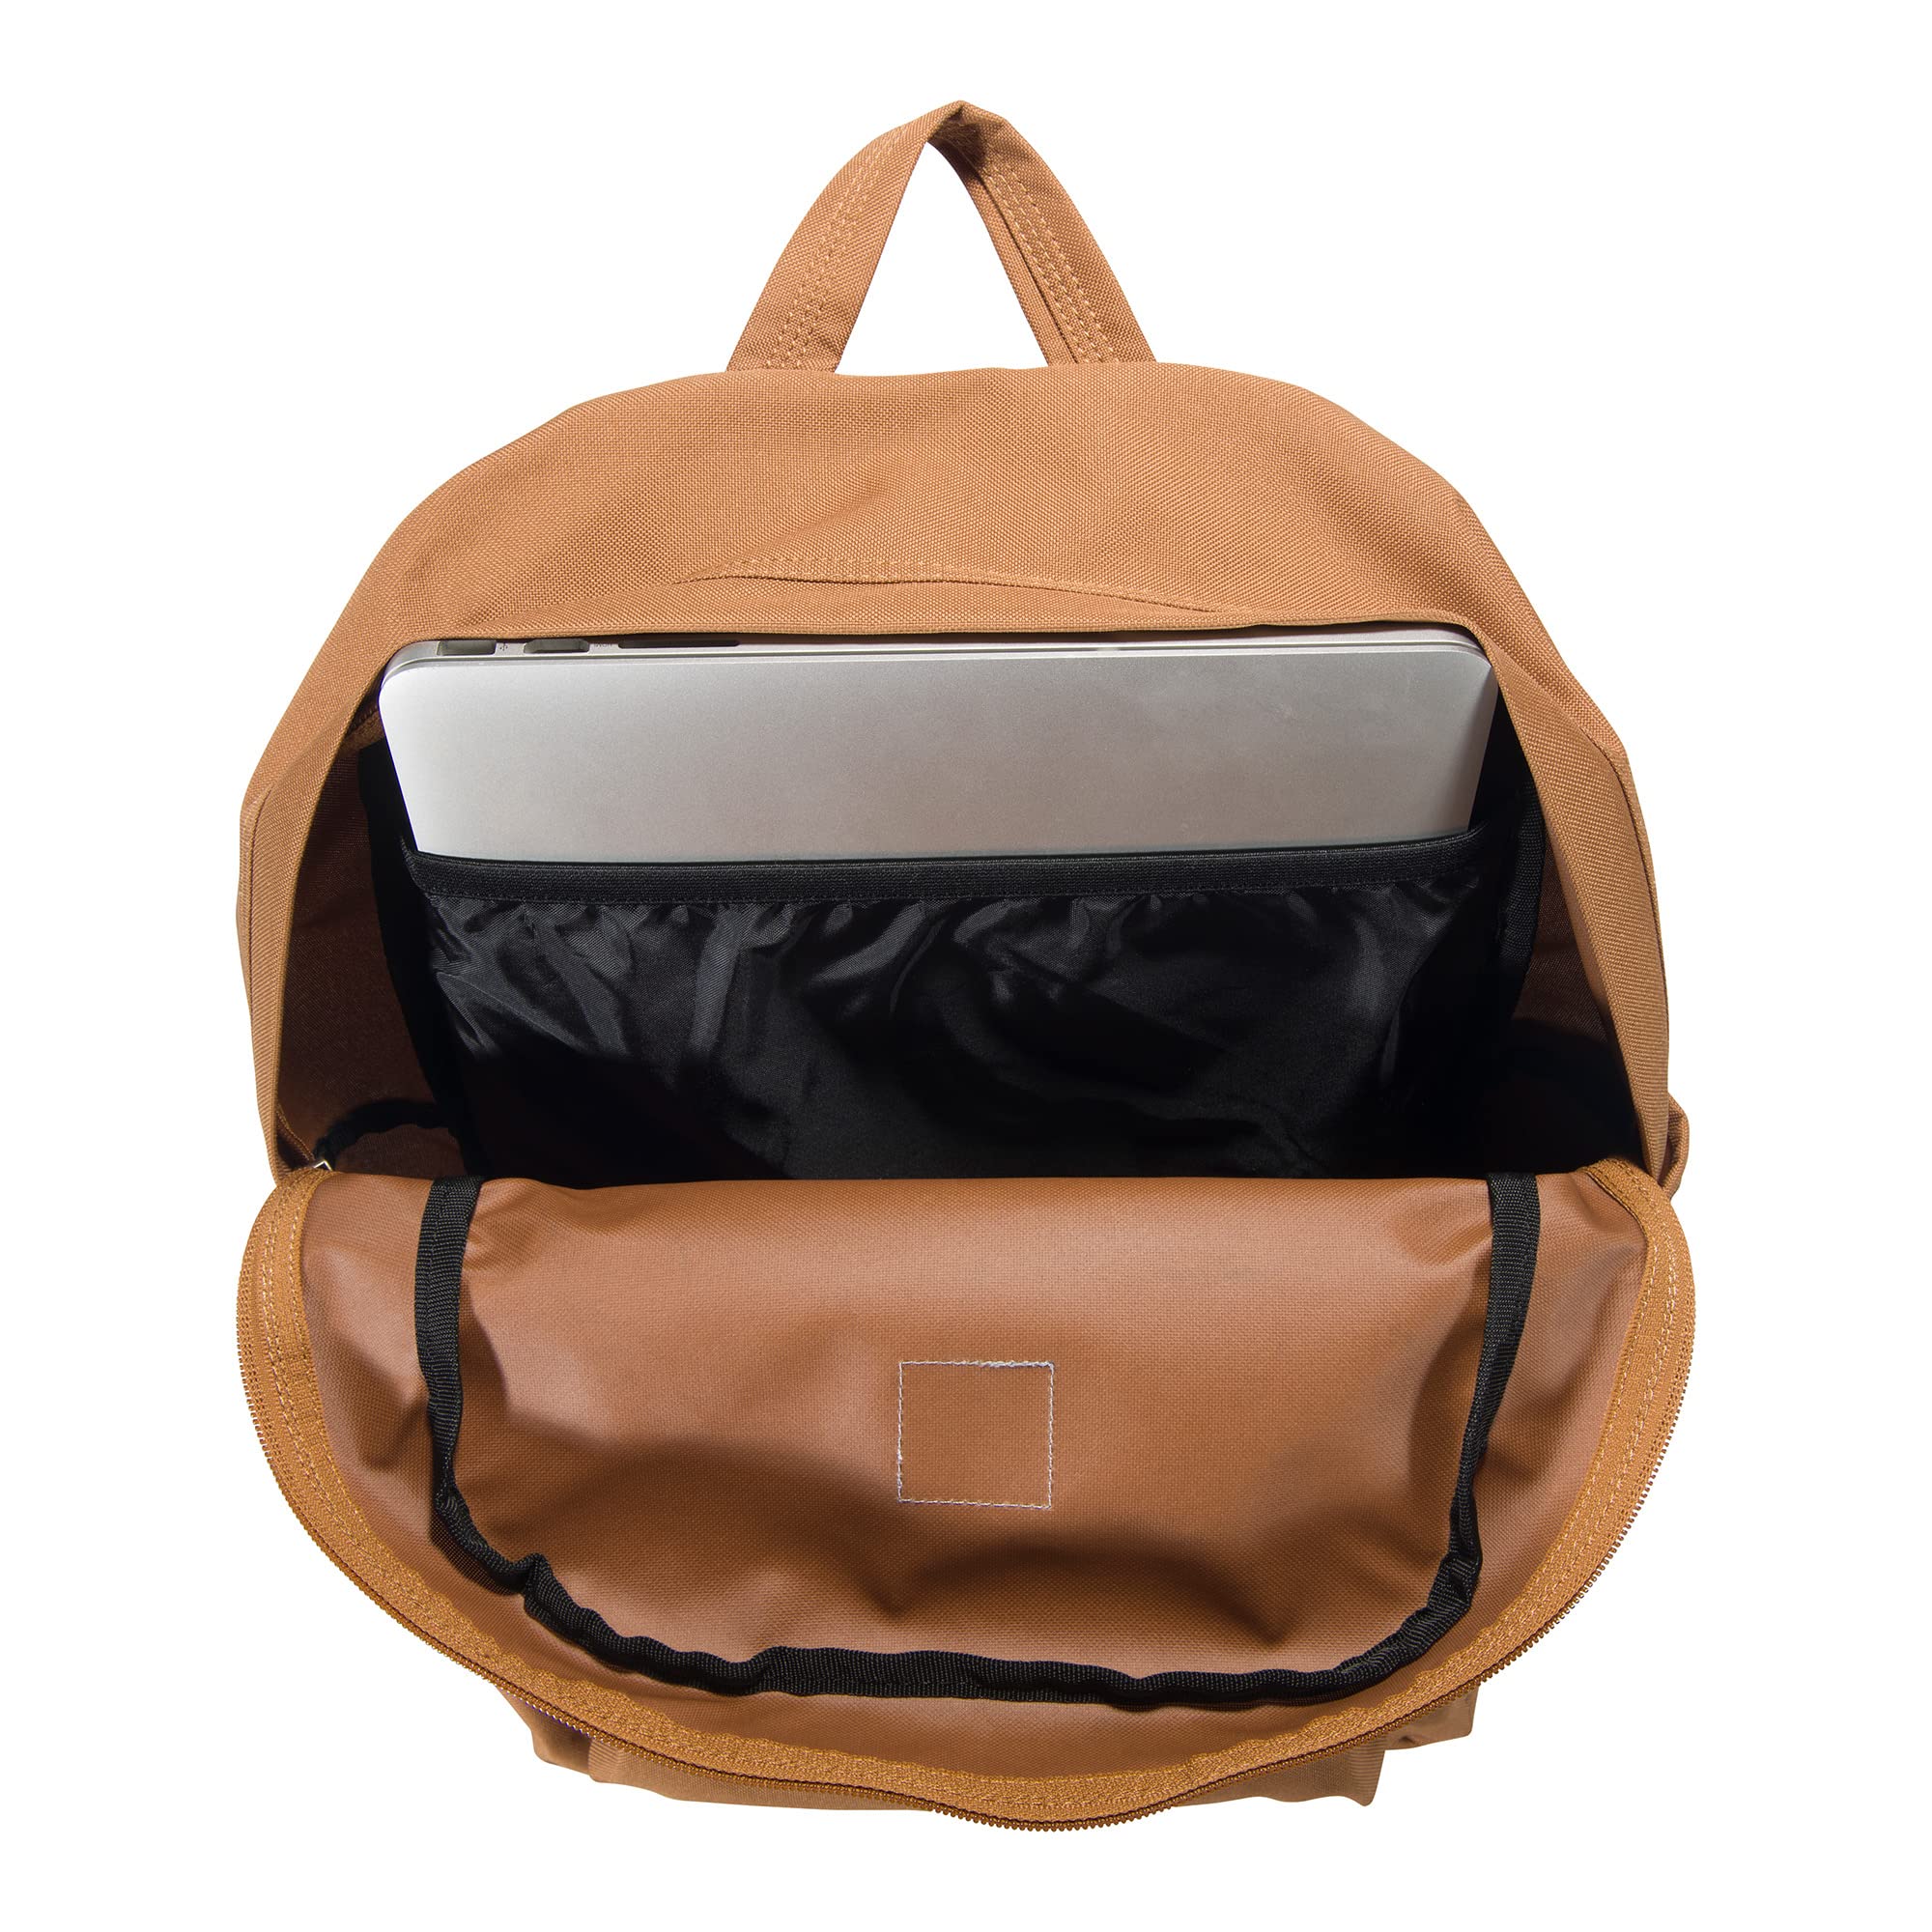 Carhartt 21 L Essential Laptop Backpack